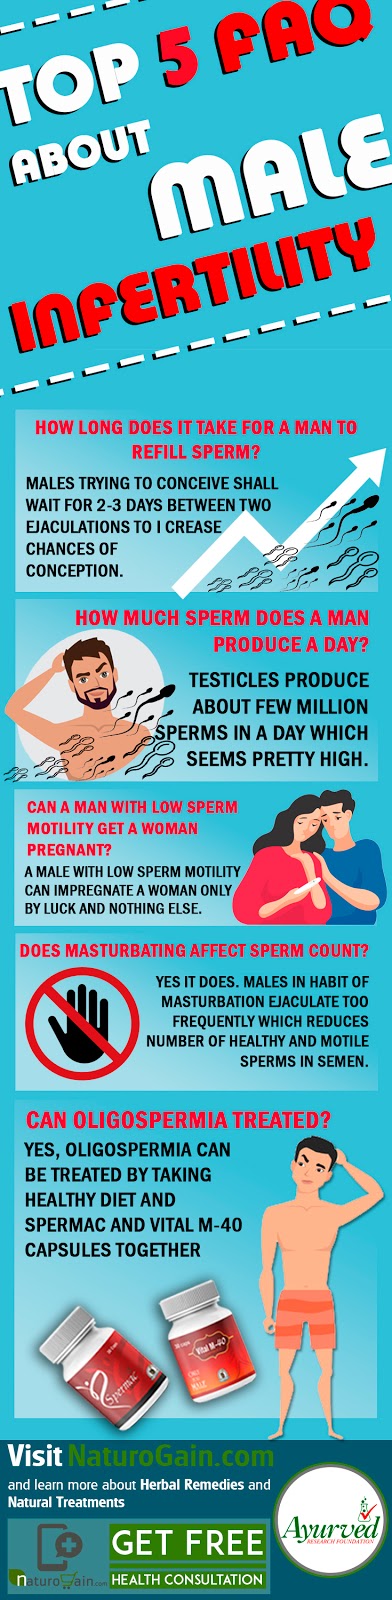 count max masturbation Can my decrese sperm